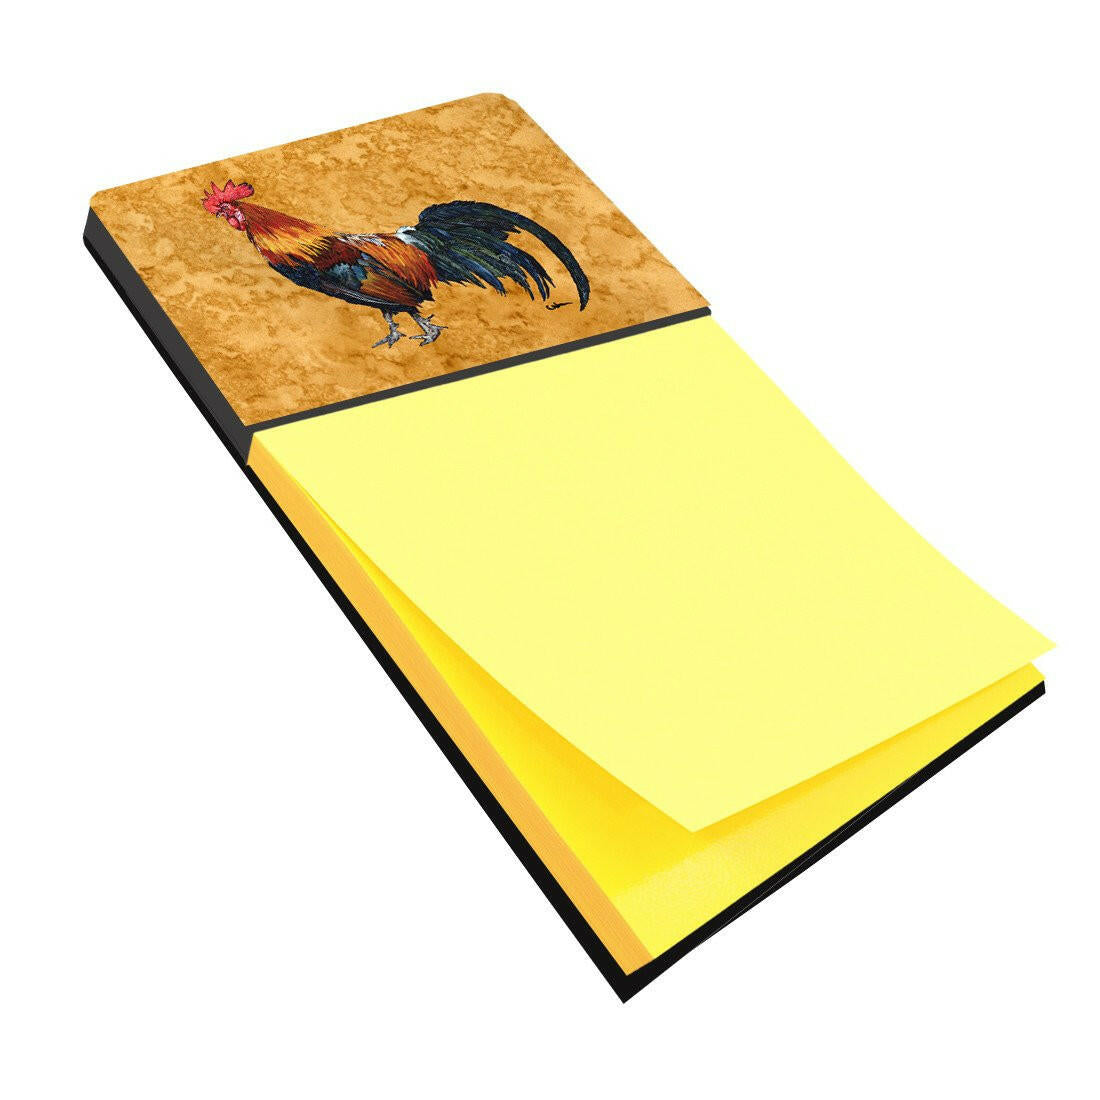 Rooster Refiillable Sticky Note Holder or Postit Note Dispenser 8651SN by Caroline's Treasures